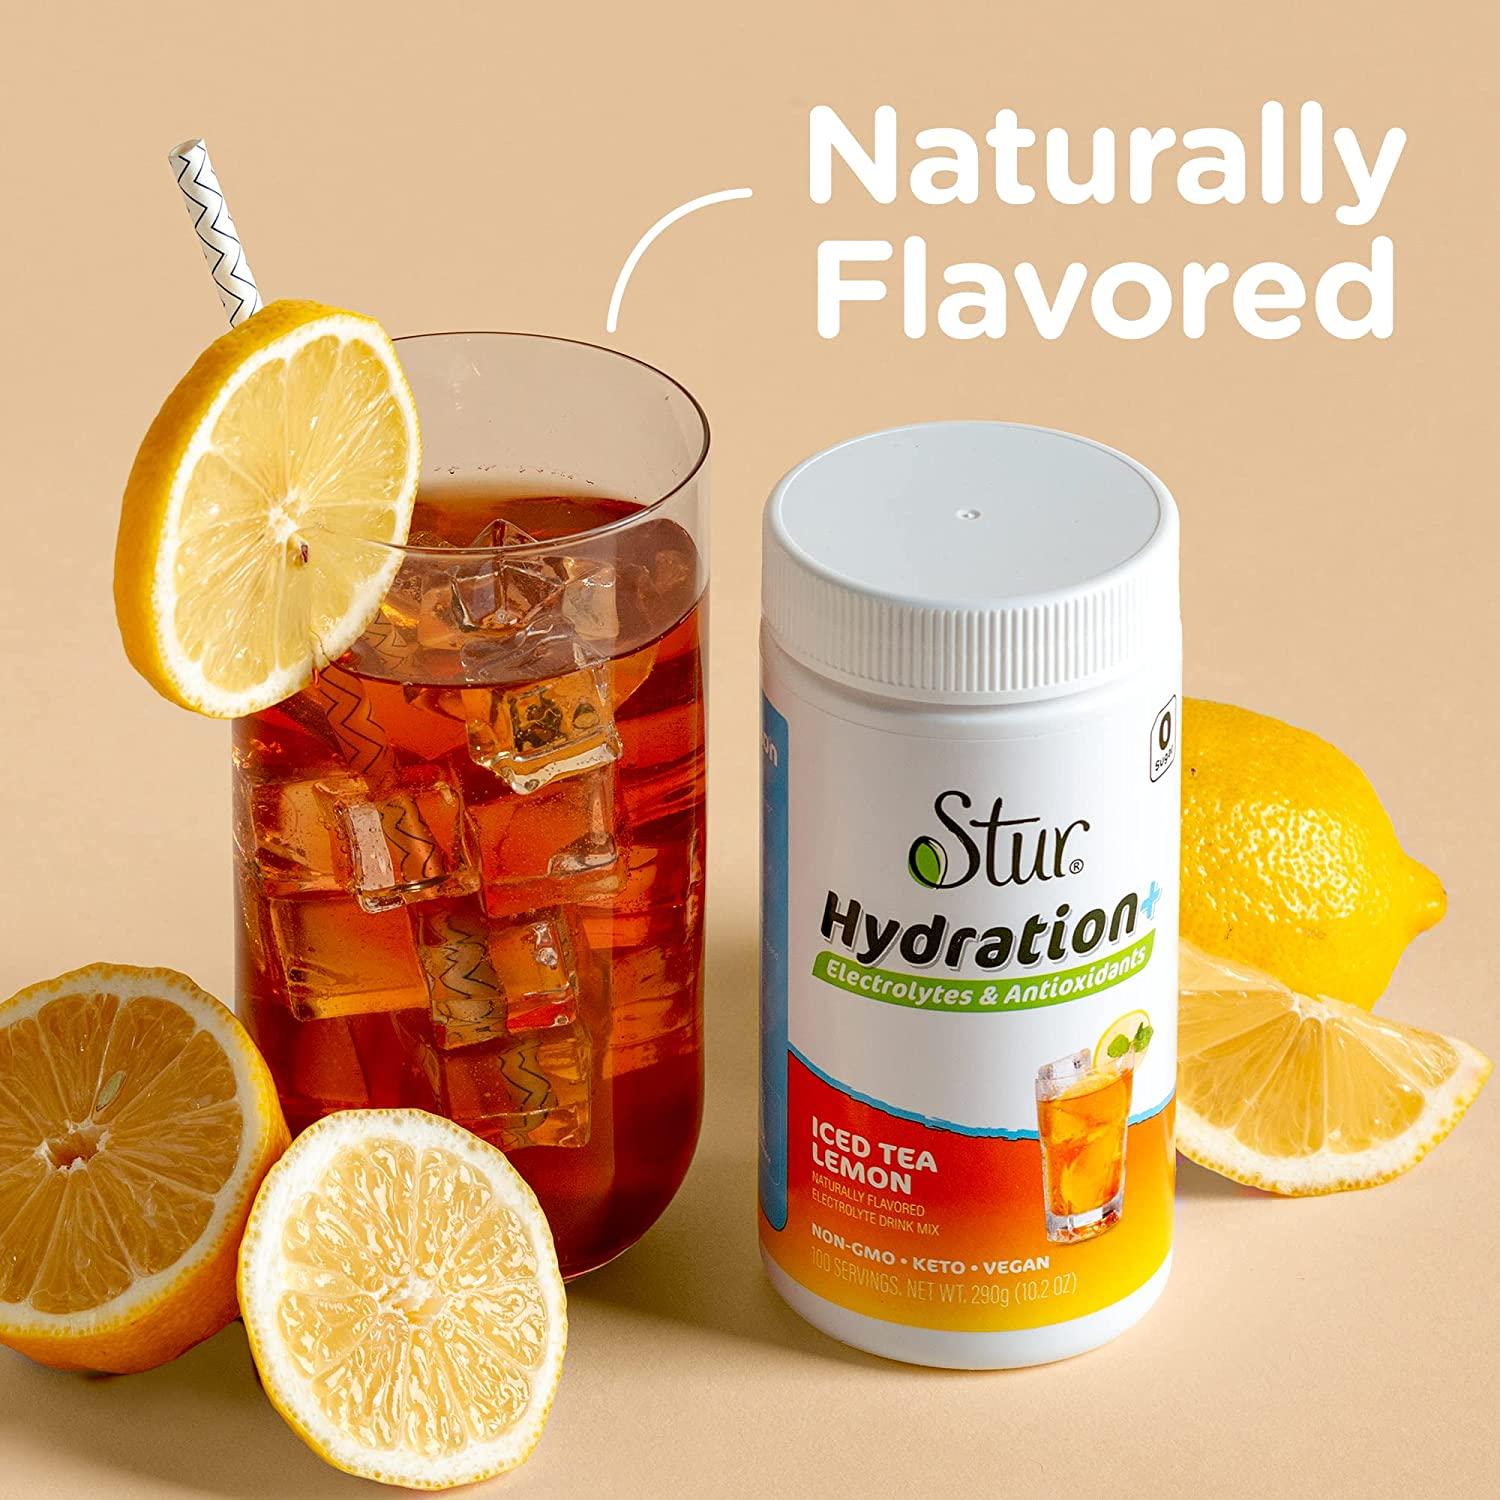 Stur Electrolyte Hydration Powder, Lemon Lime, Sugar Free